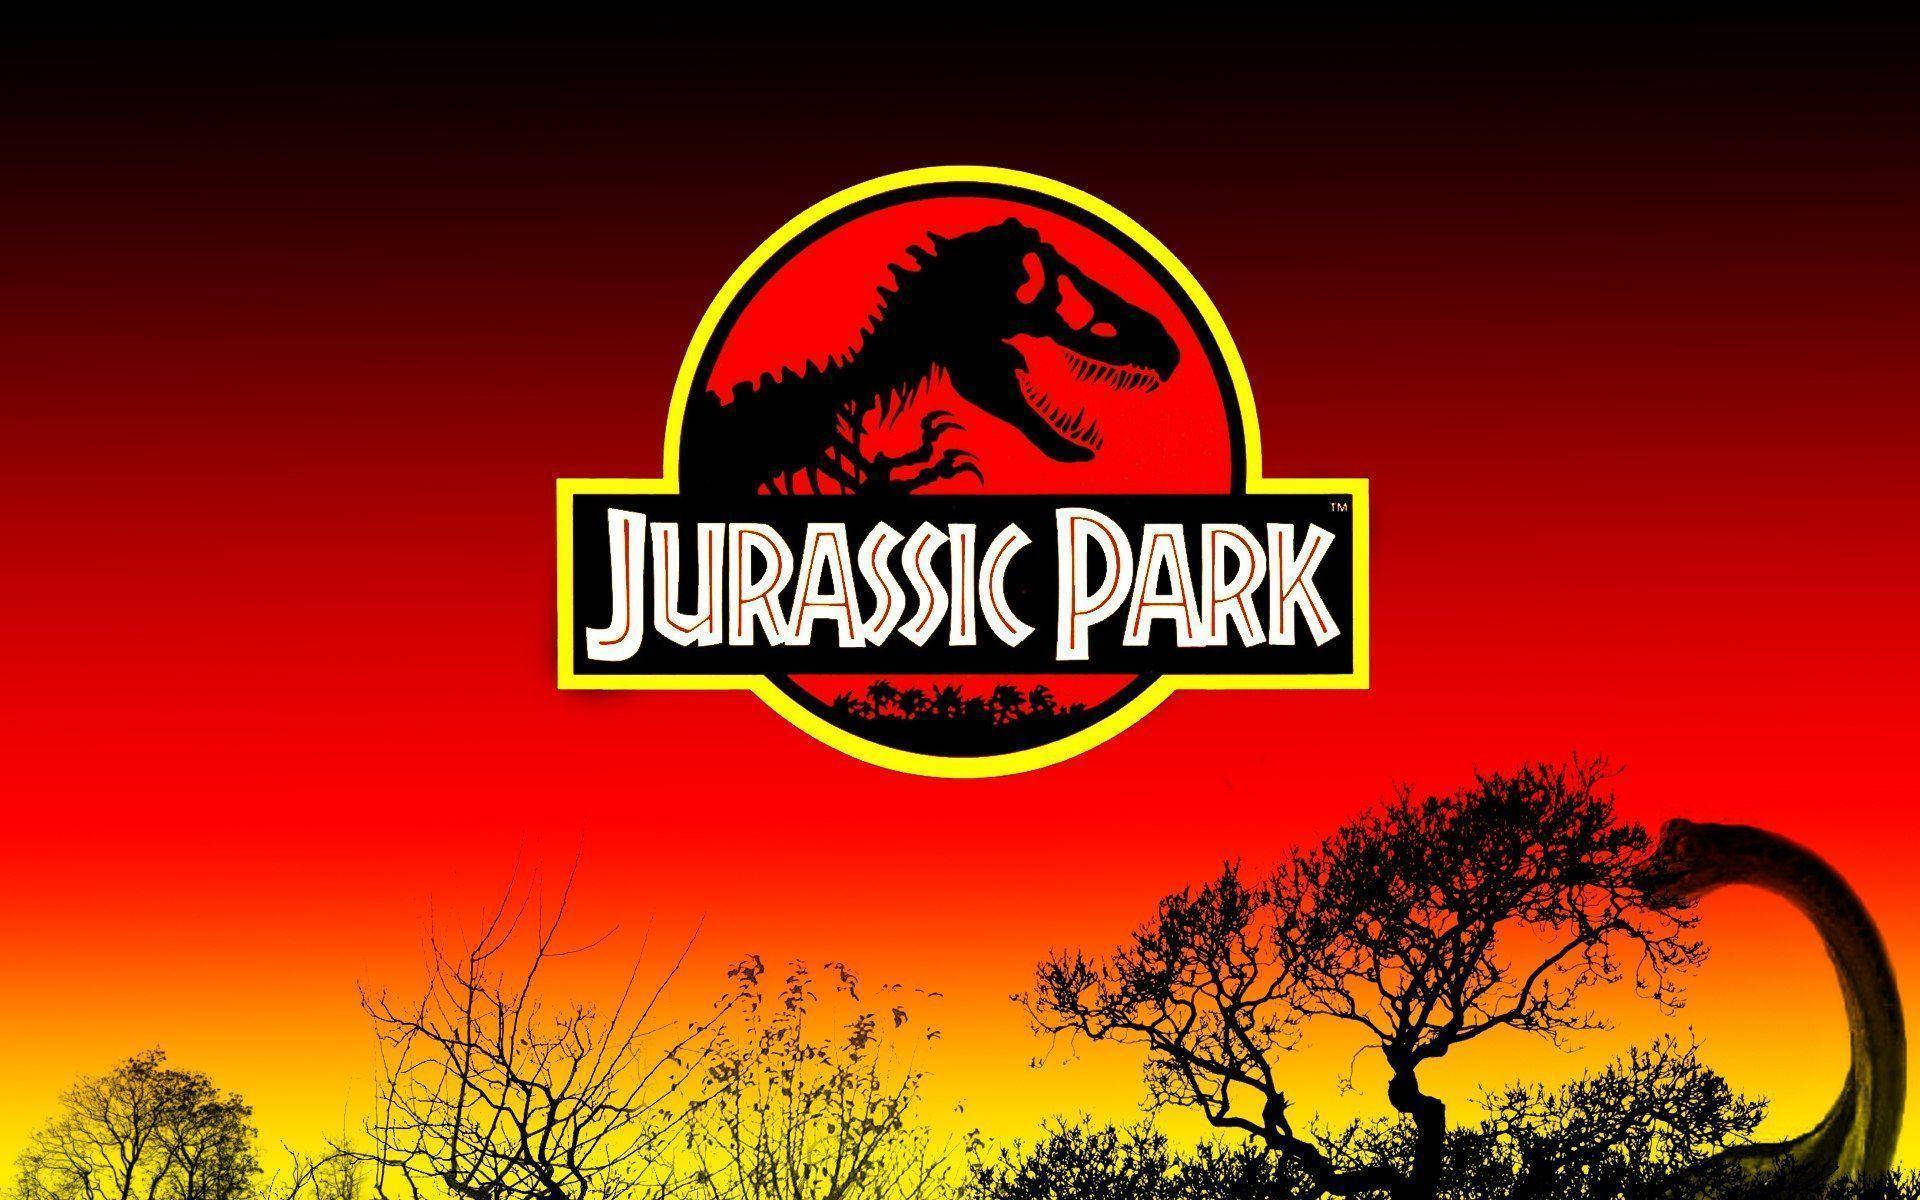 Top 999+ Jurassic Park Wallpaper Full HD, 4K✅Free to Use